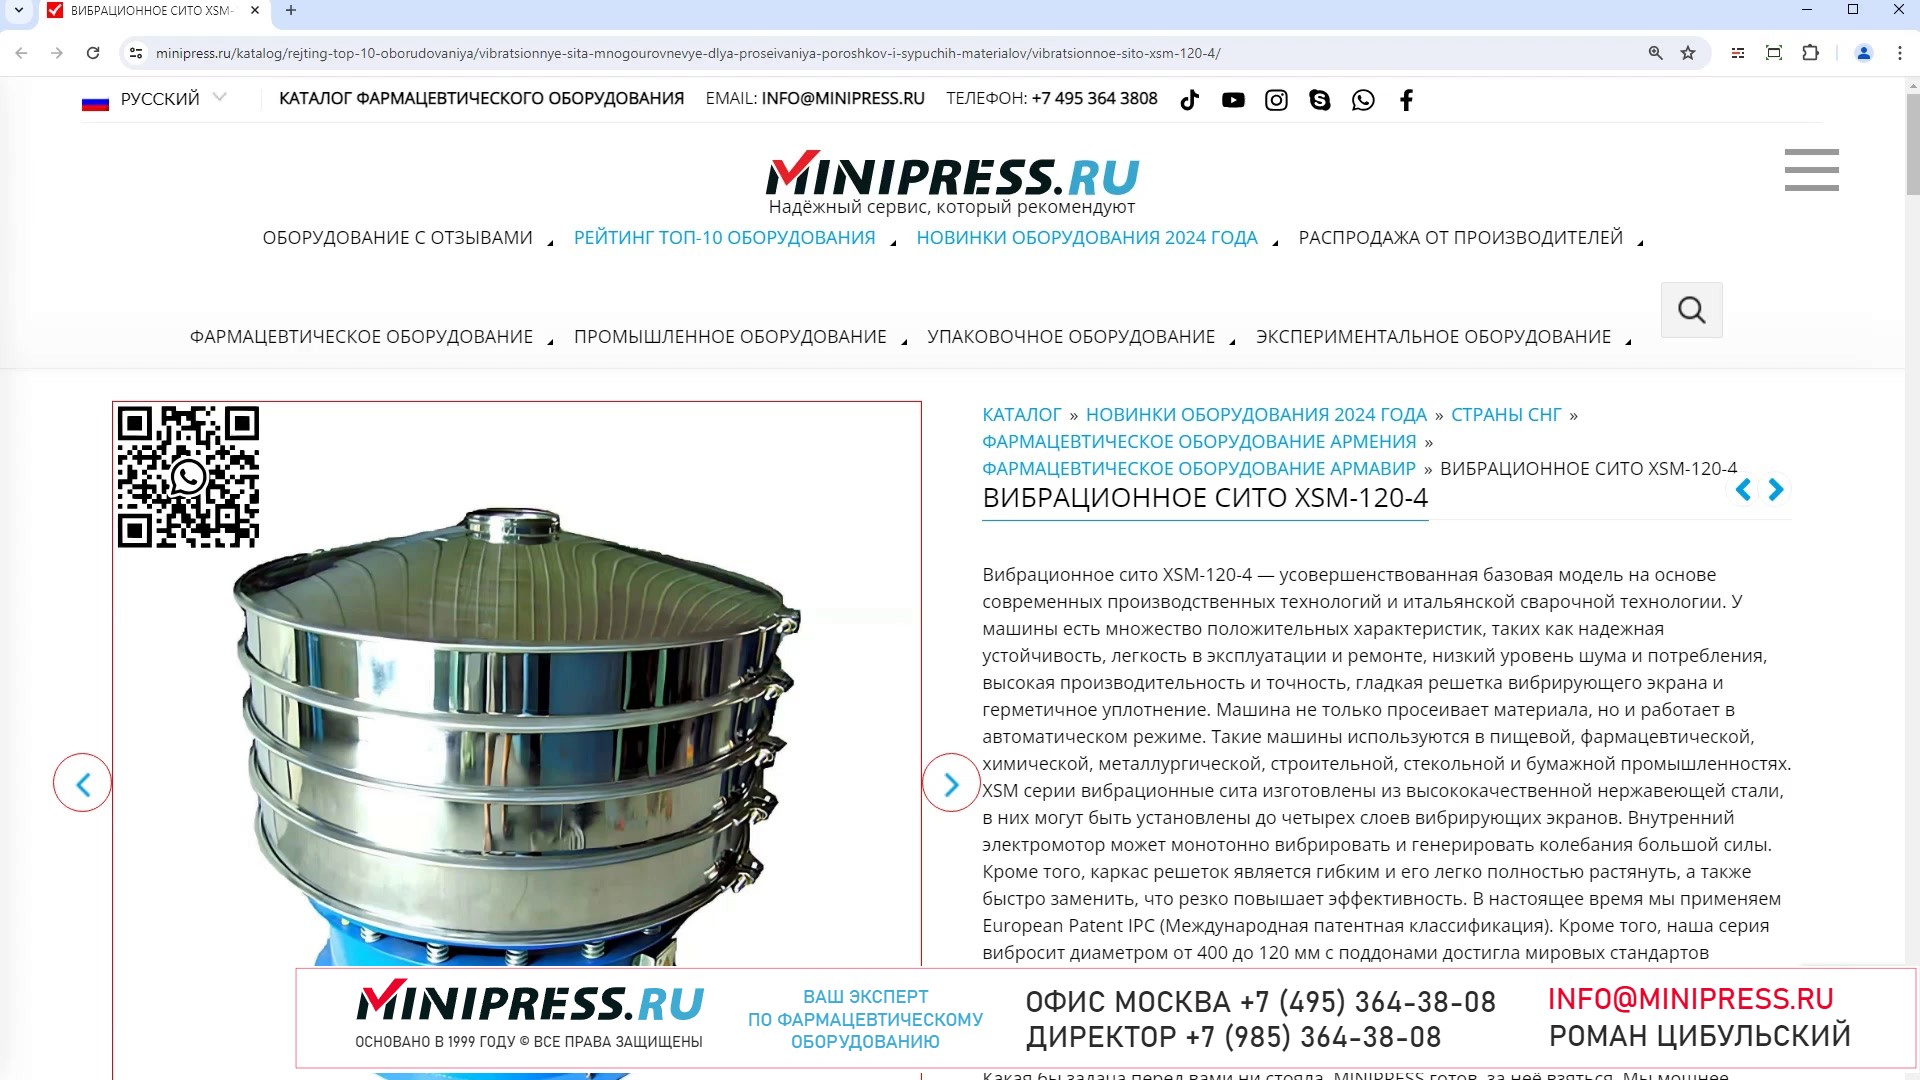 Minipress.ru Вибрационное сито XSM-120-4